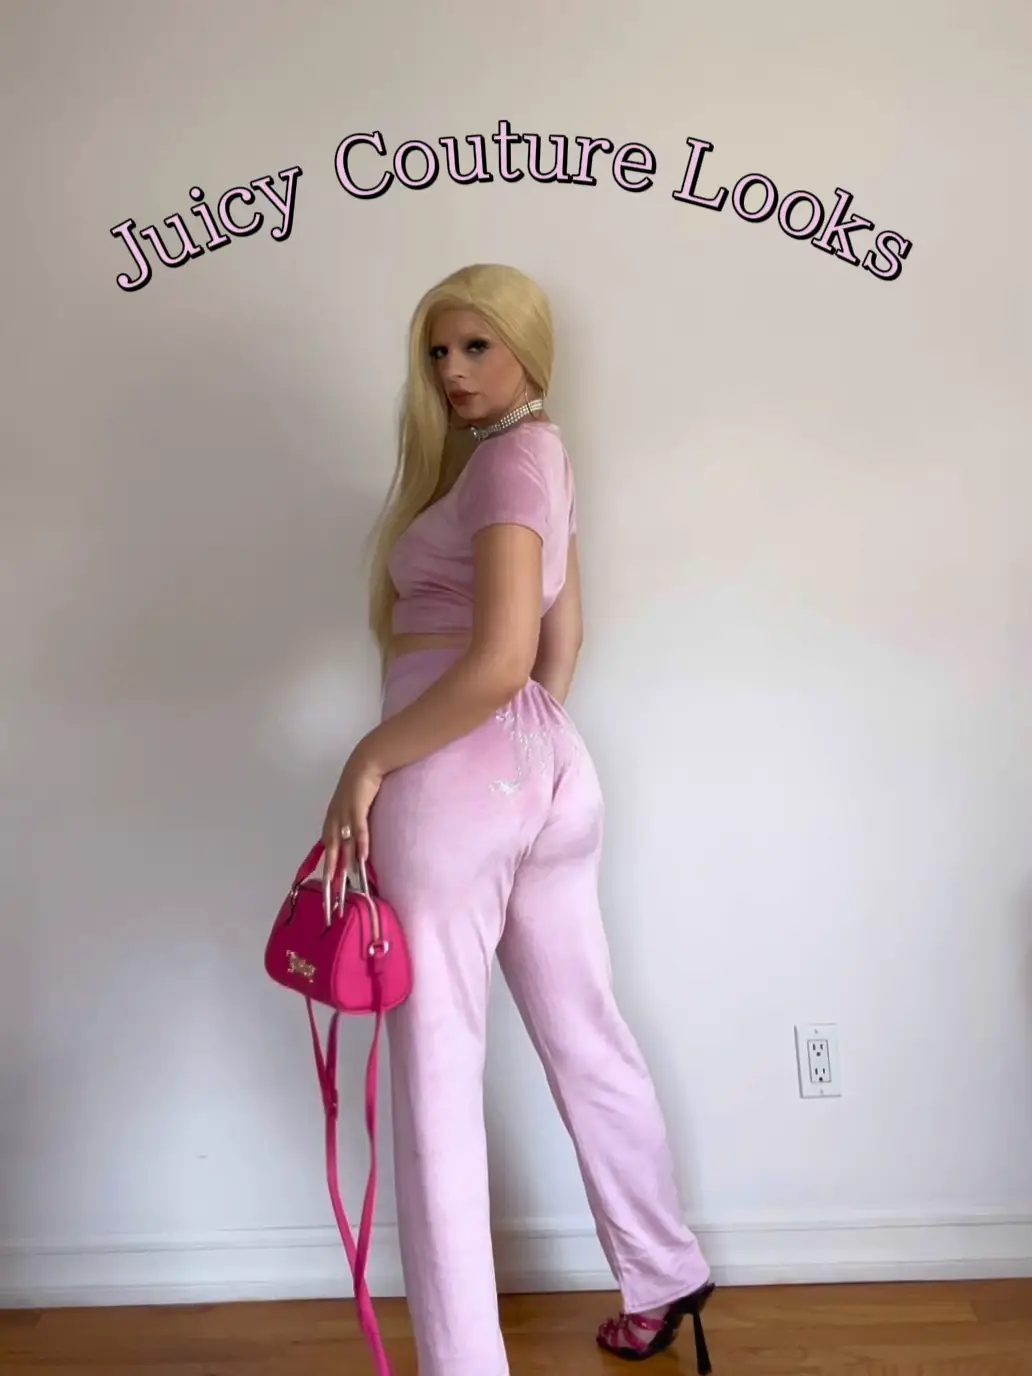 Neon pink Juicy Couture Bra. Size 34C #JuicyCouture - Depop